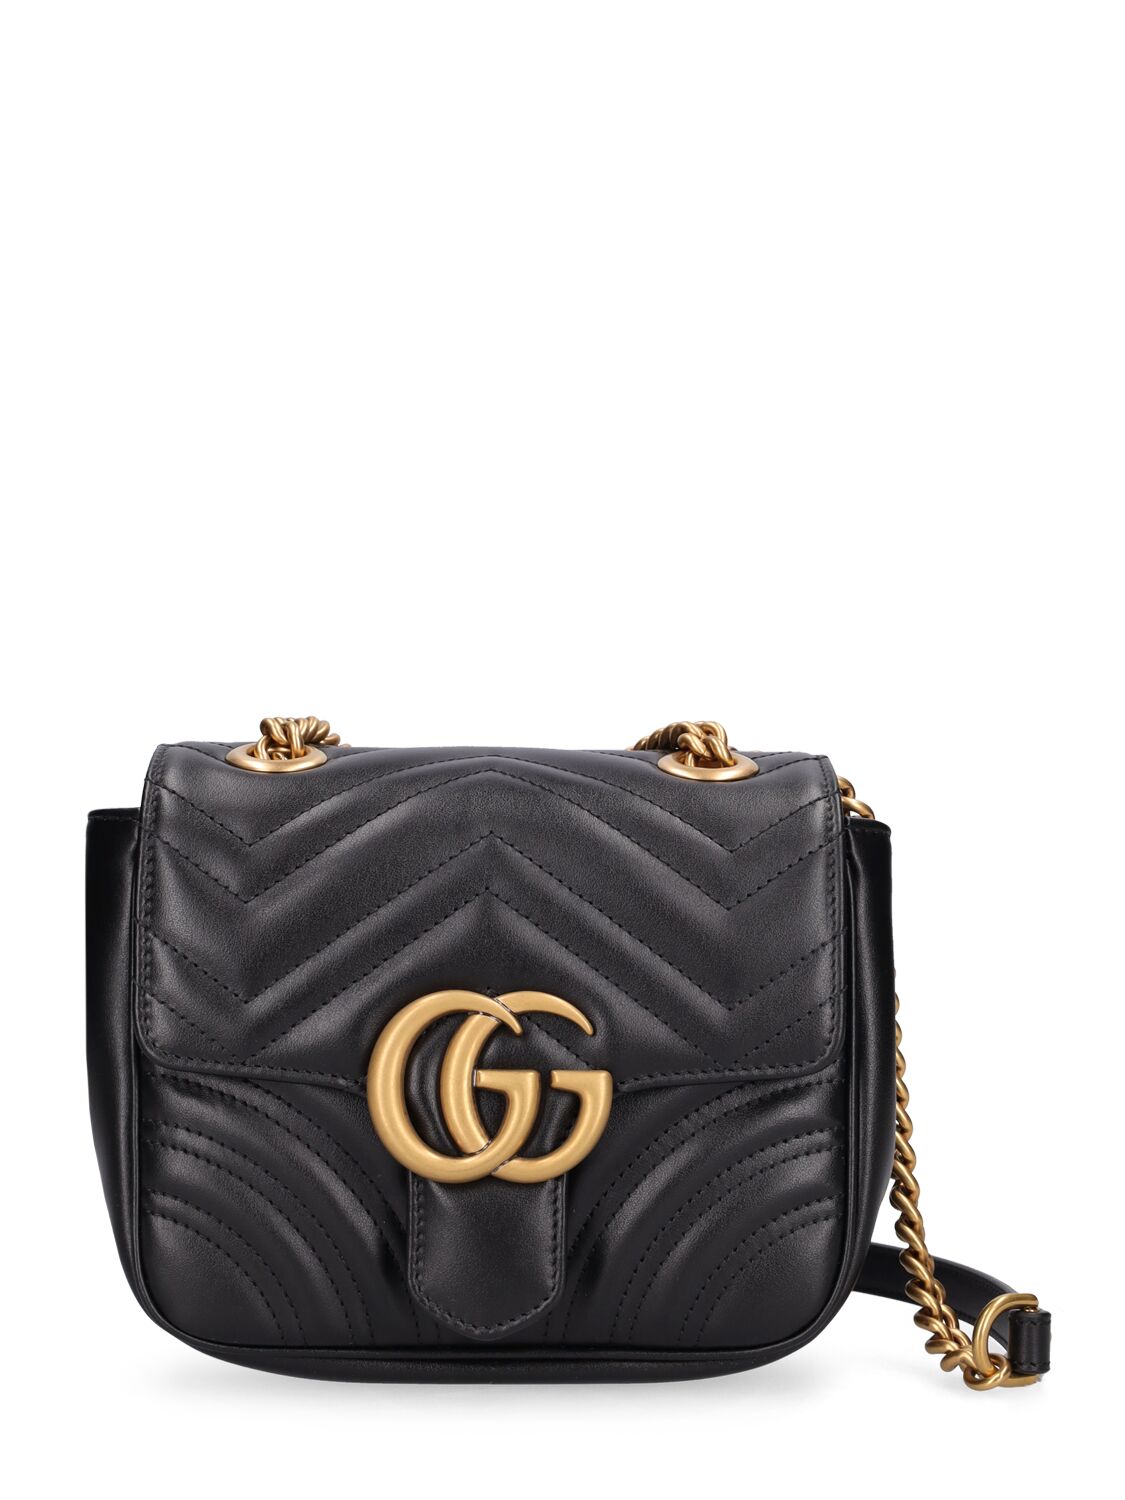 Mini Gg Marmont Leather Shoulder Bag